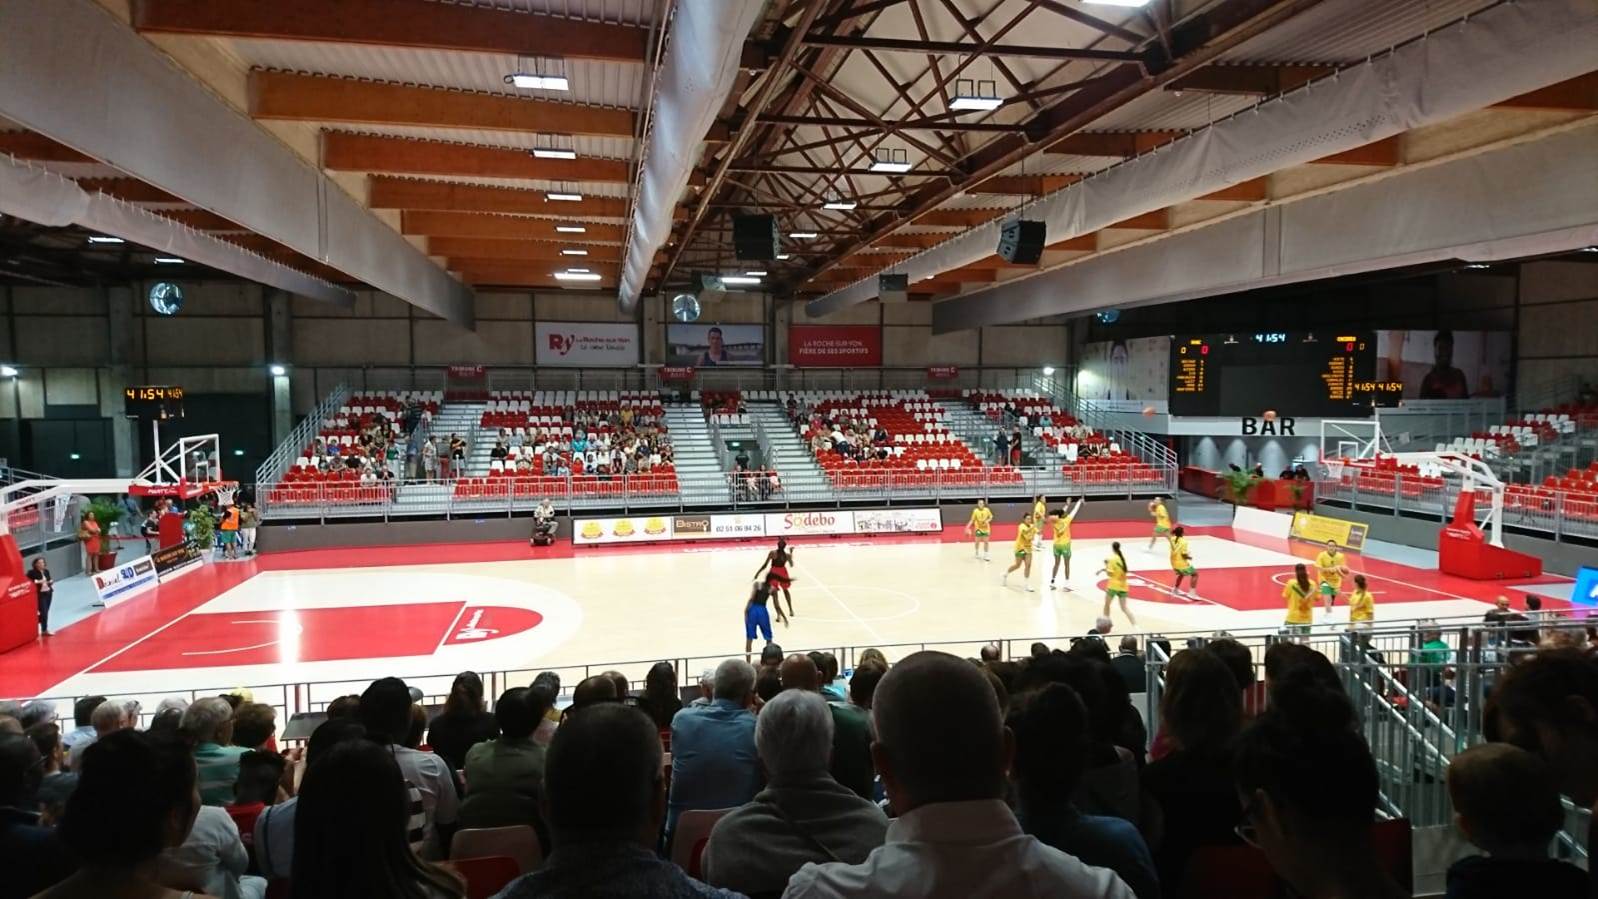 Salle de basket ball Les Oudairies La Roche Sur Yon